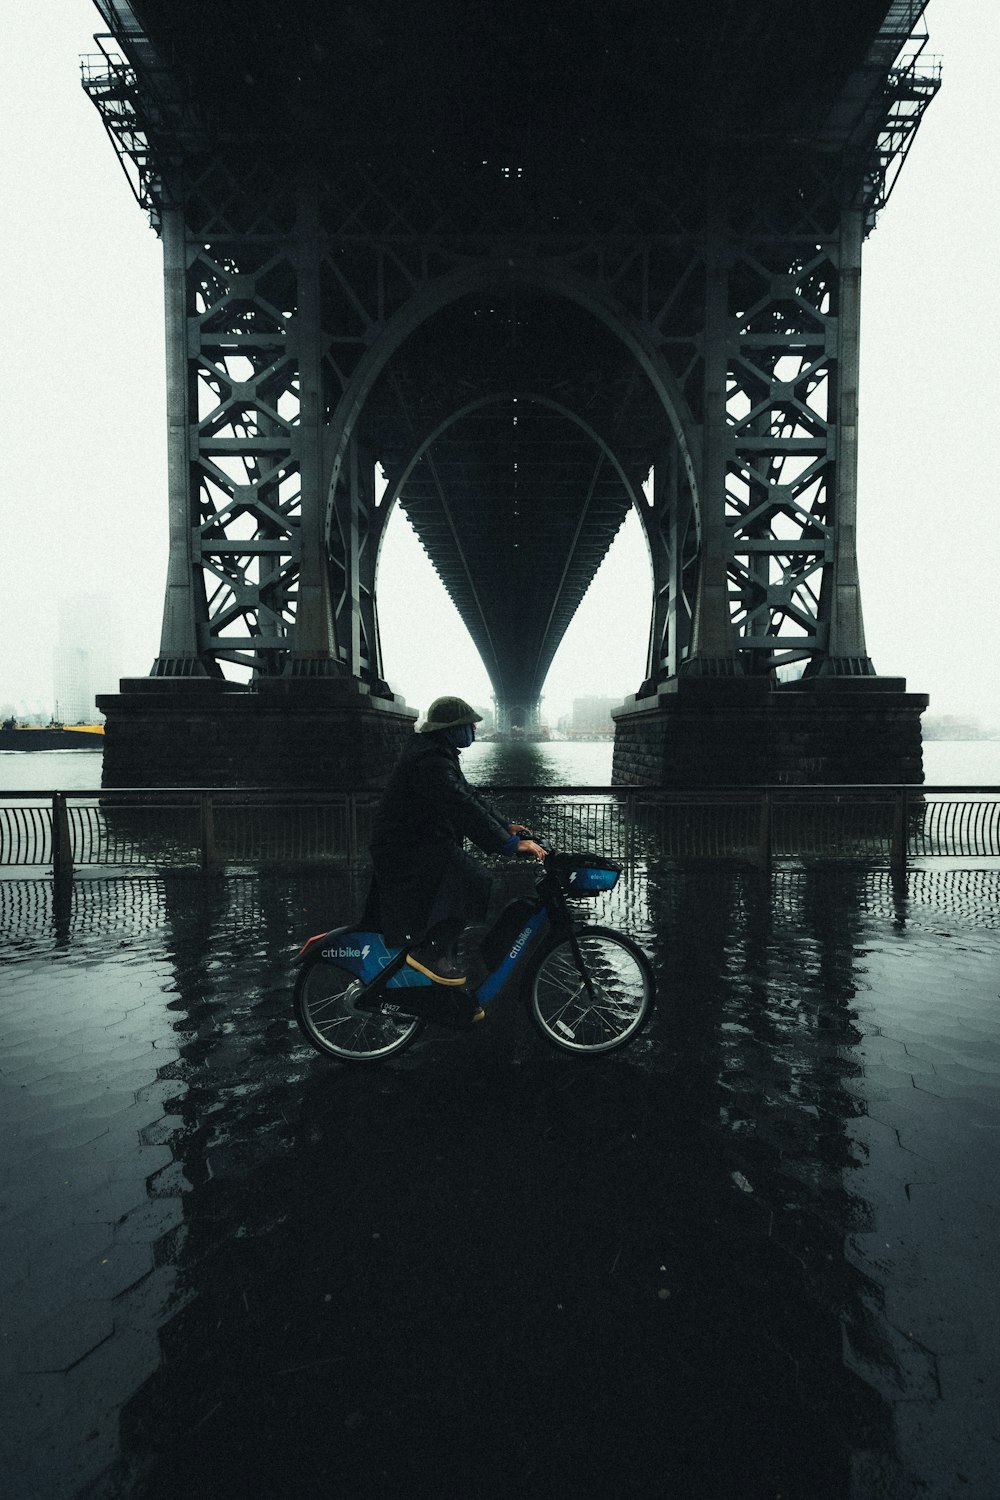 a person riding a bike under a bridge